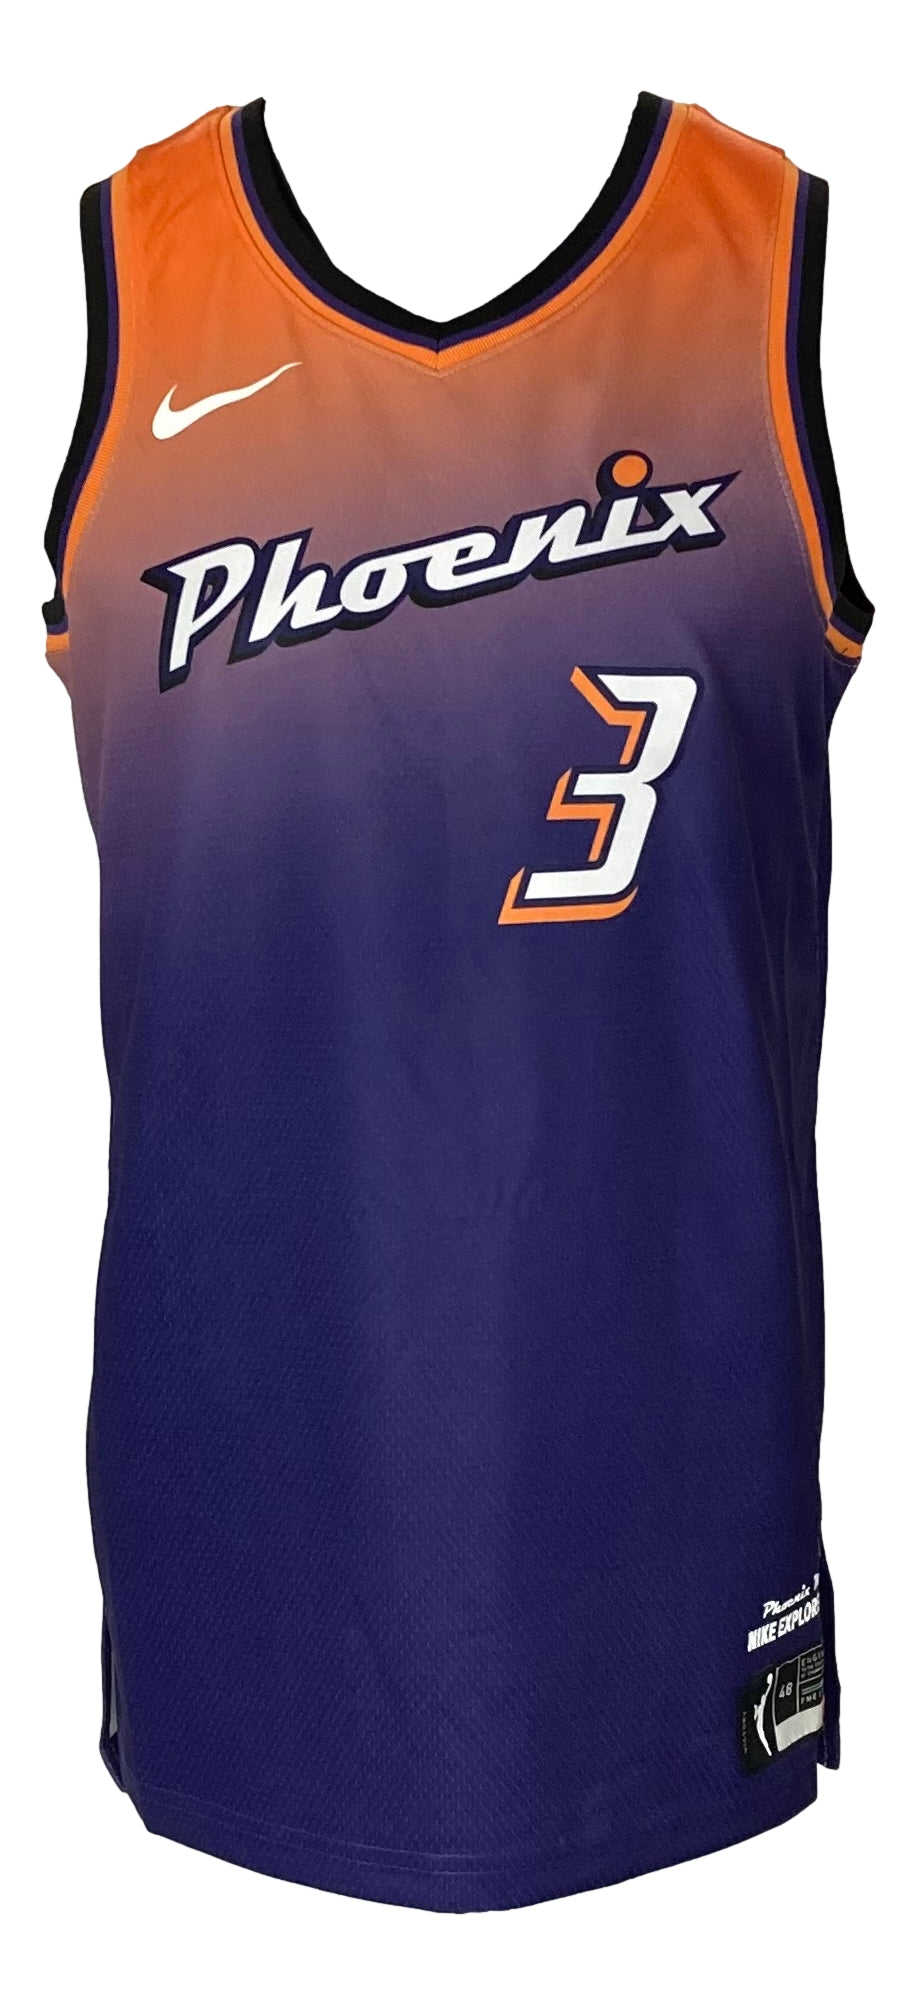 NBA Store - Get your Phoenix Mercury Nike Explorer Edition